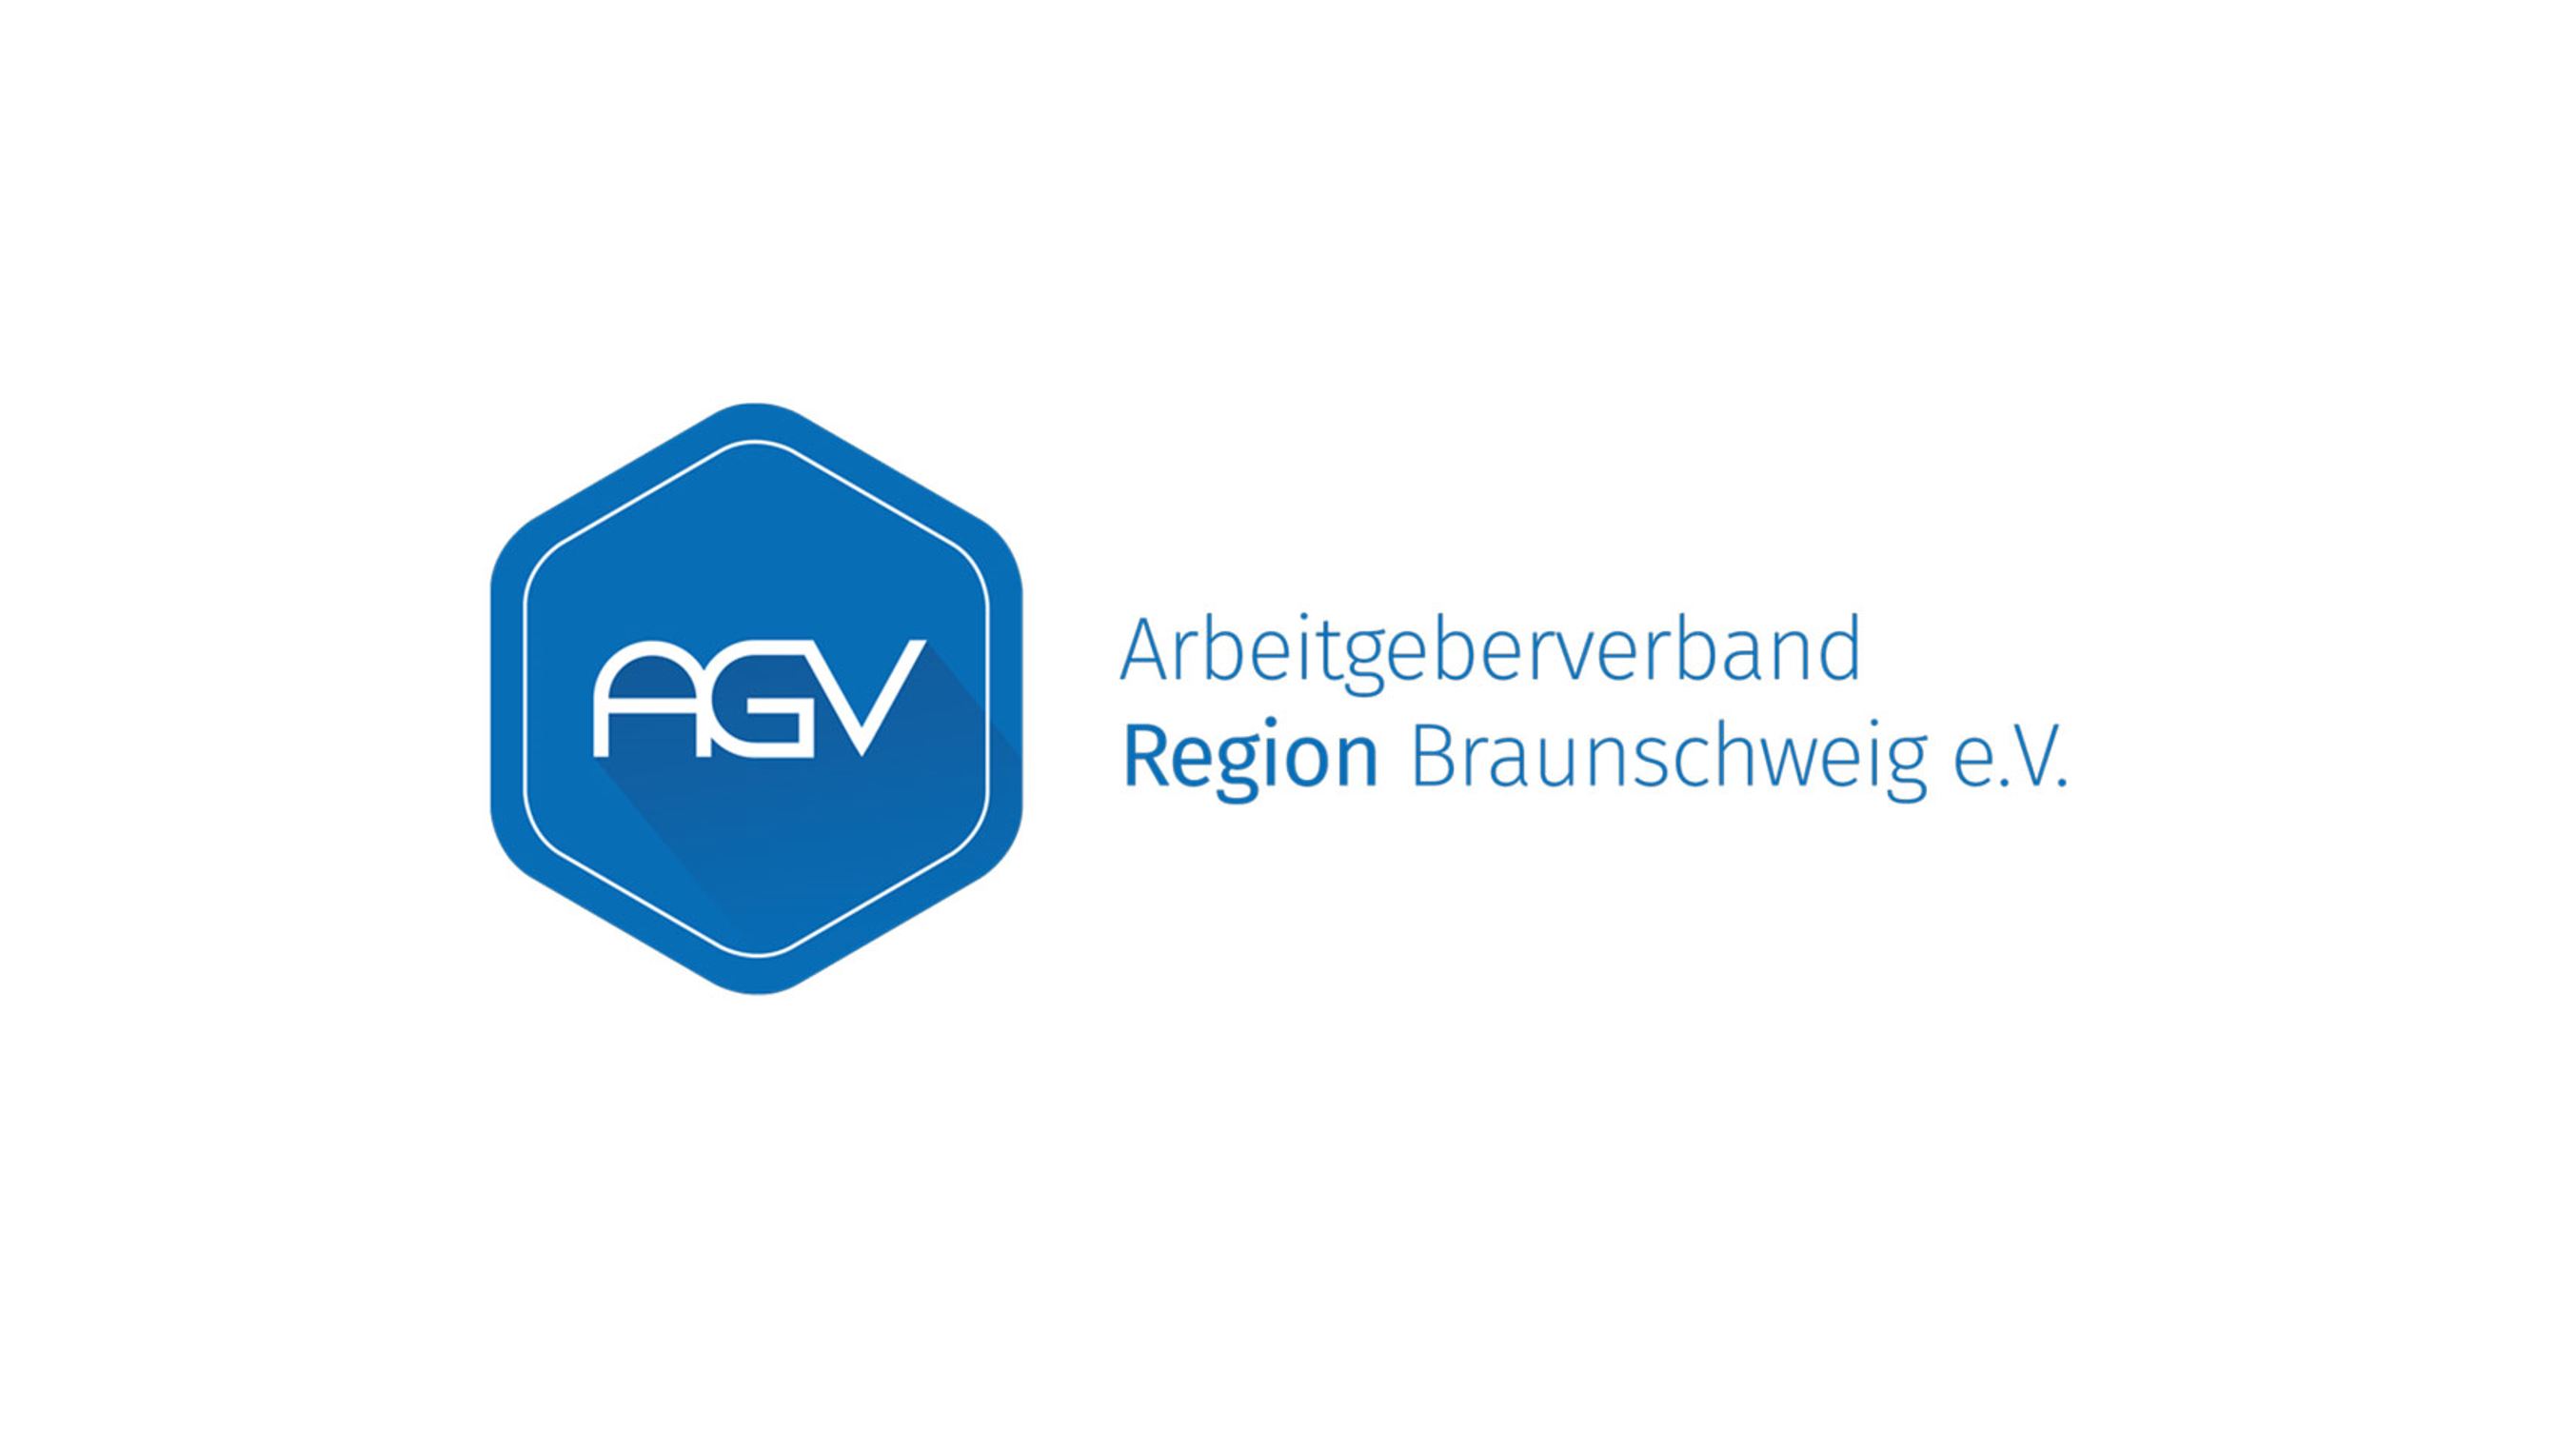 Arbeitergeber Verband Region Braunschweig e.V. (AGV)